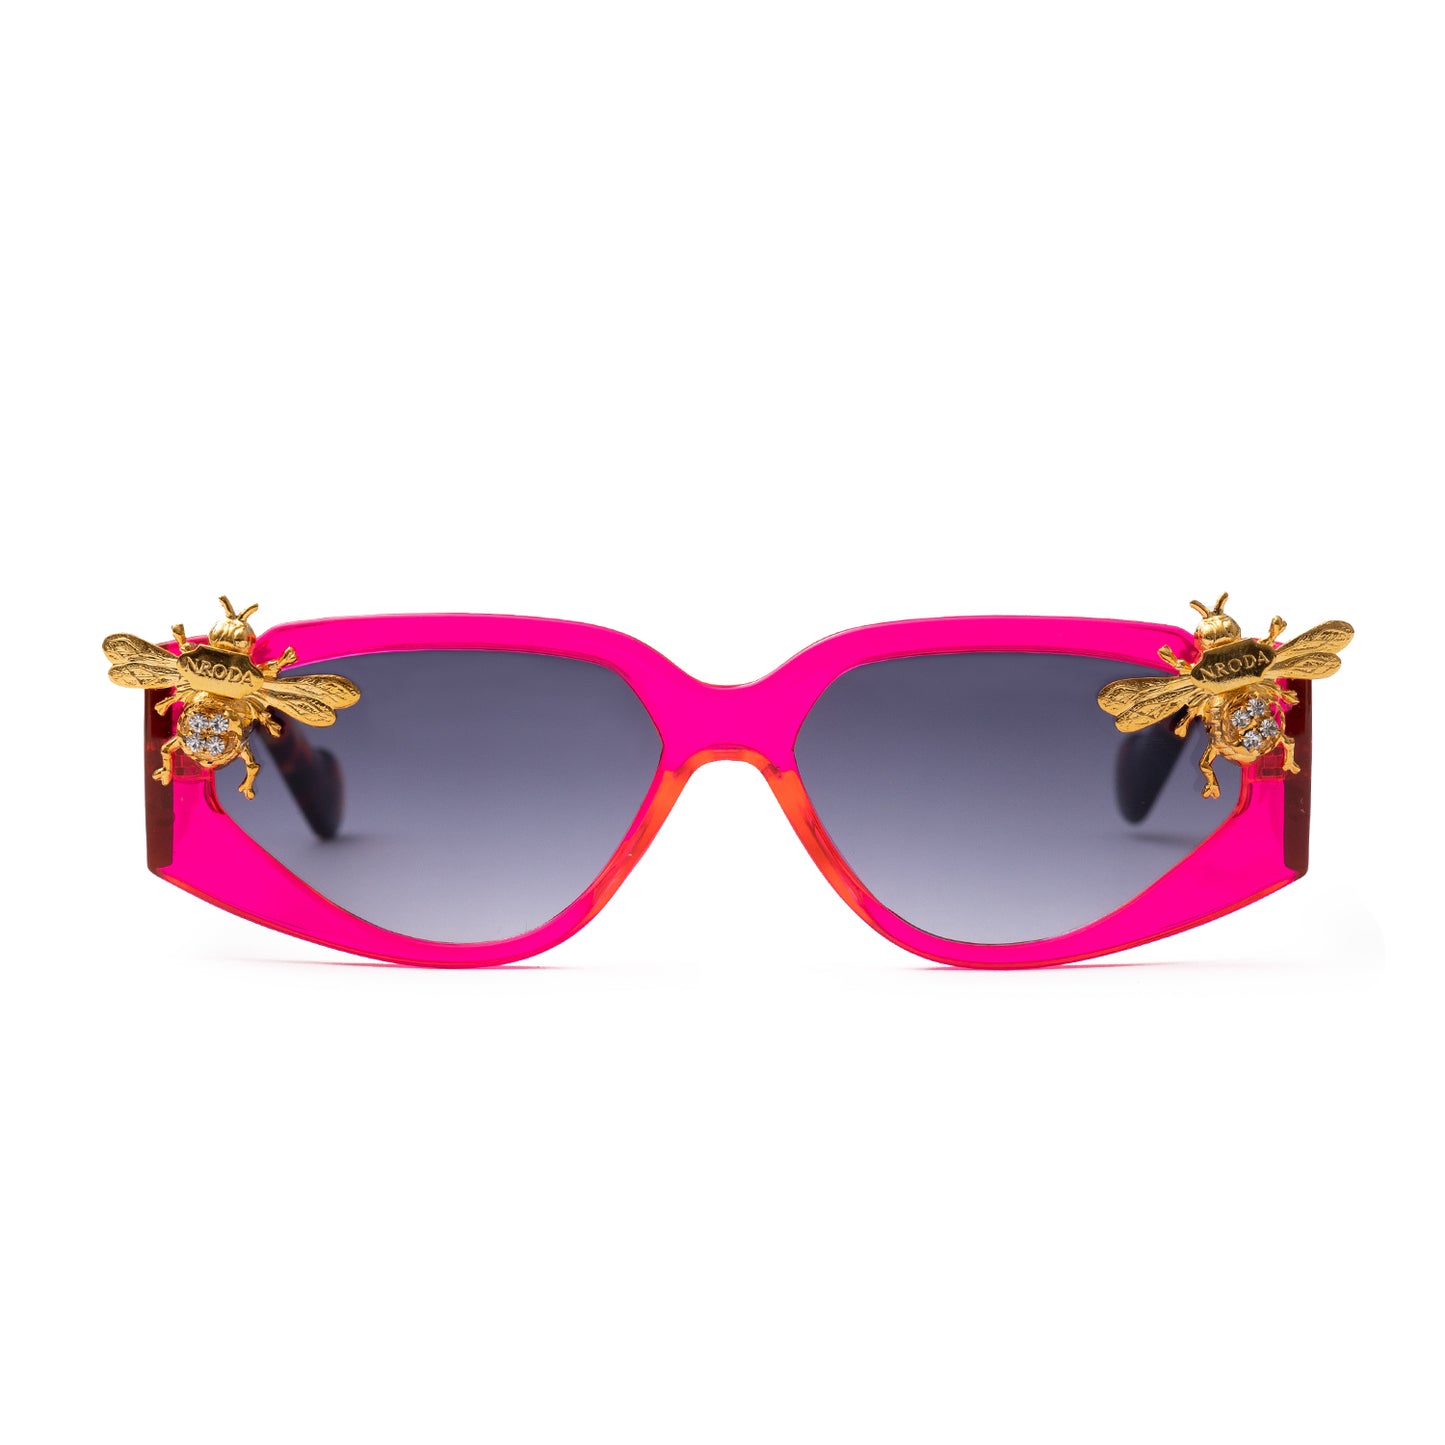 Nroda Riviera Bee - Gemstone Edition Fire Rose Eyewear Sunglasses Collection, Tnemnroda man- NRODA